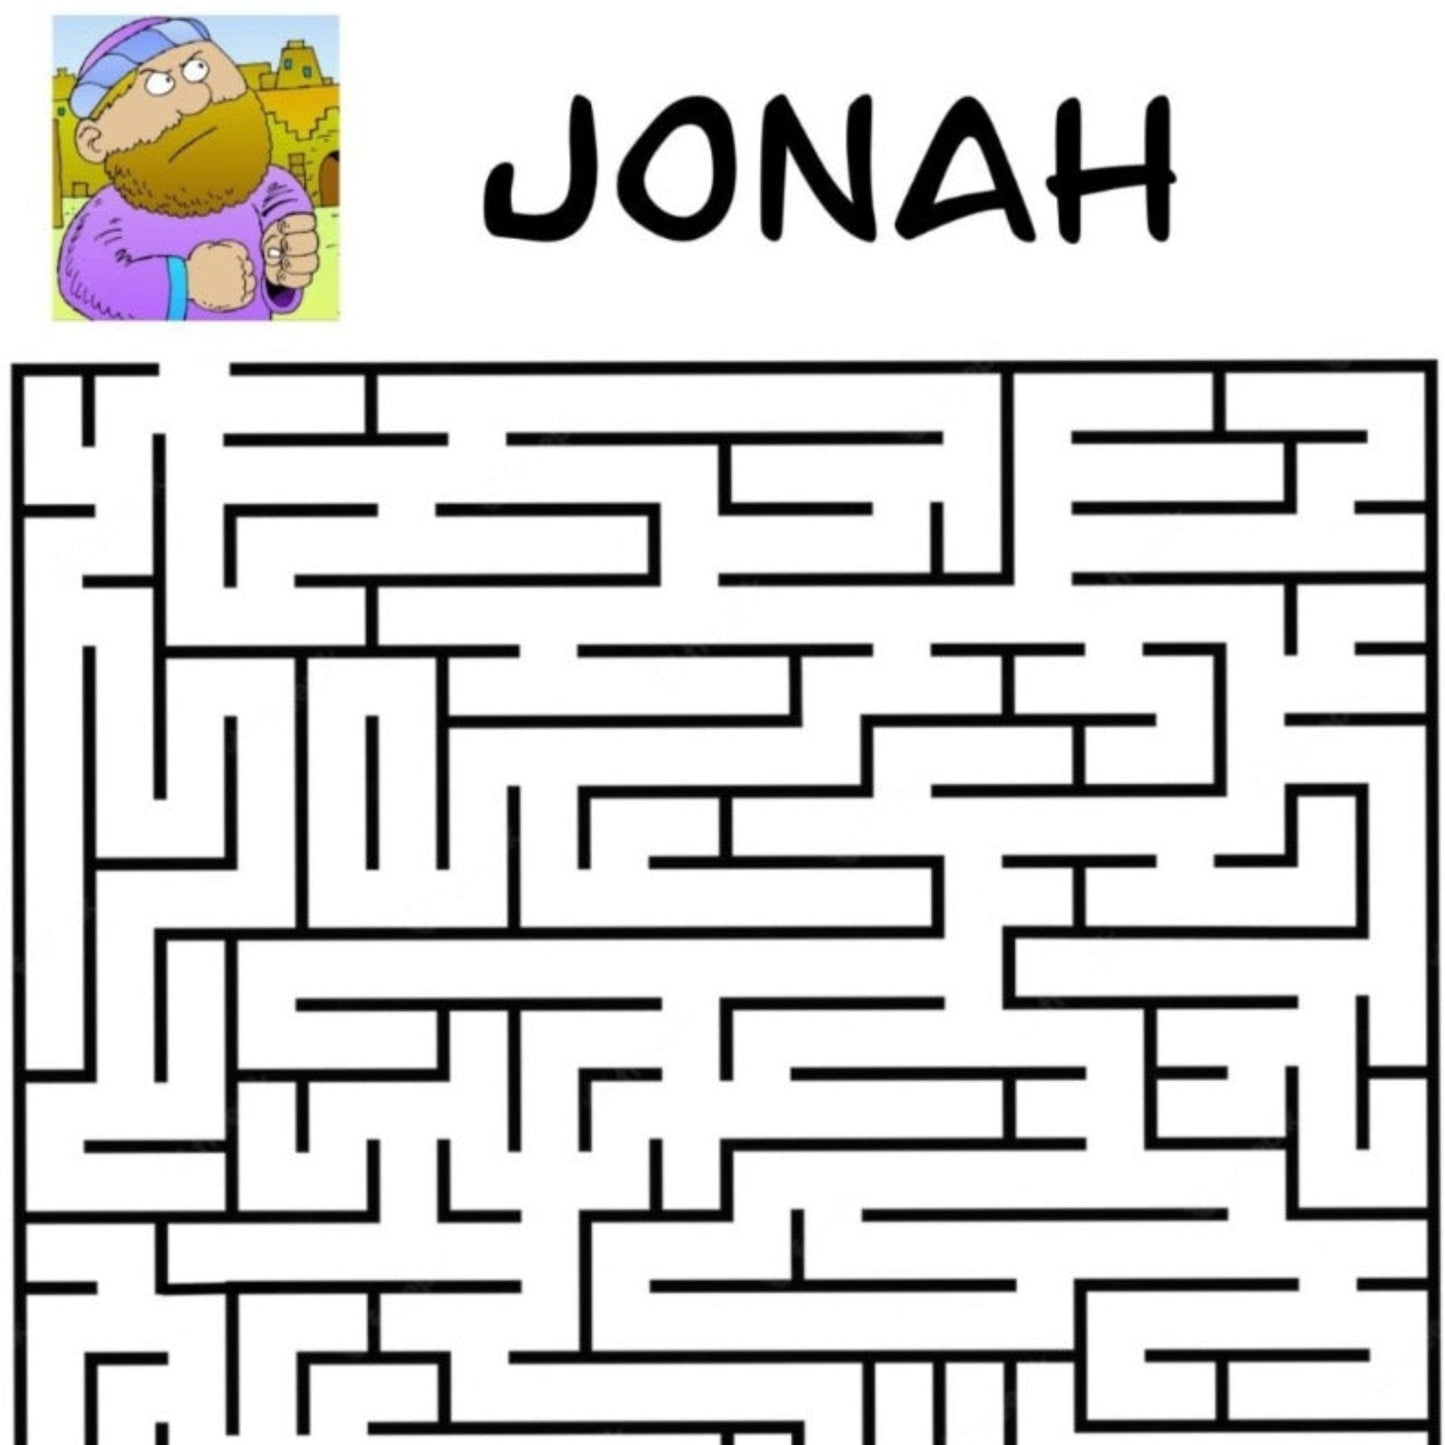 Jonah: Something Fishy Going On